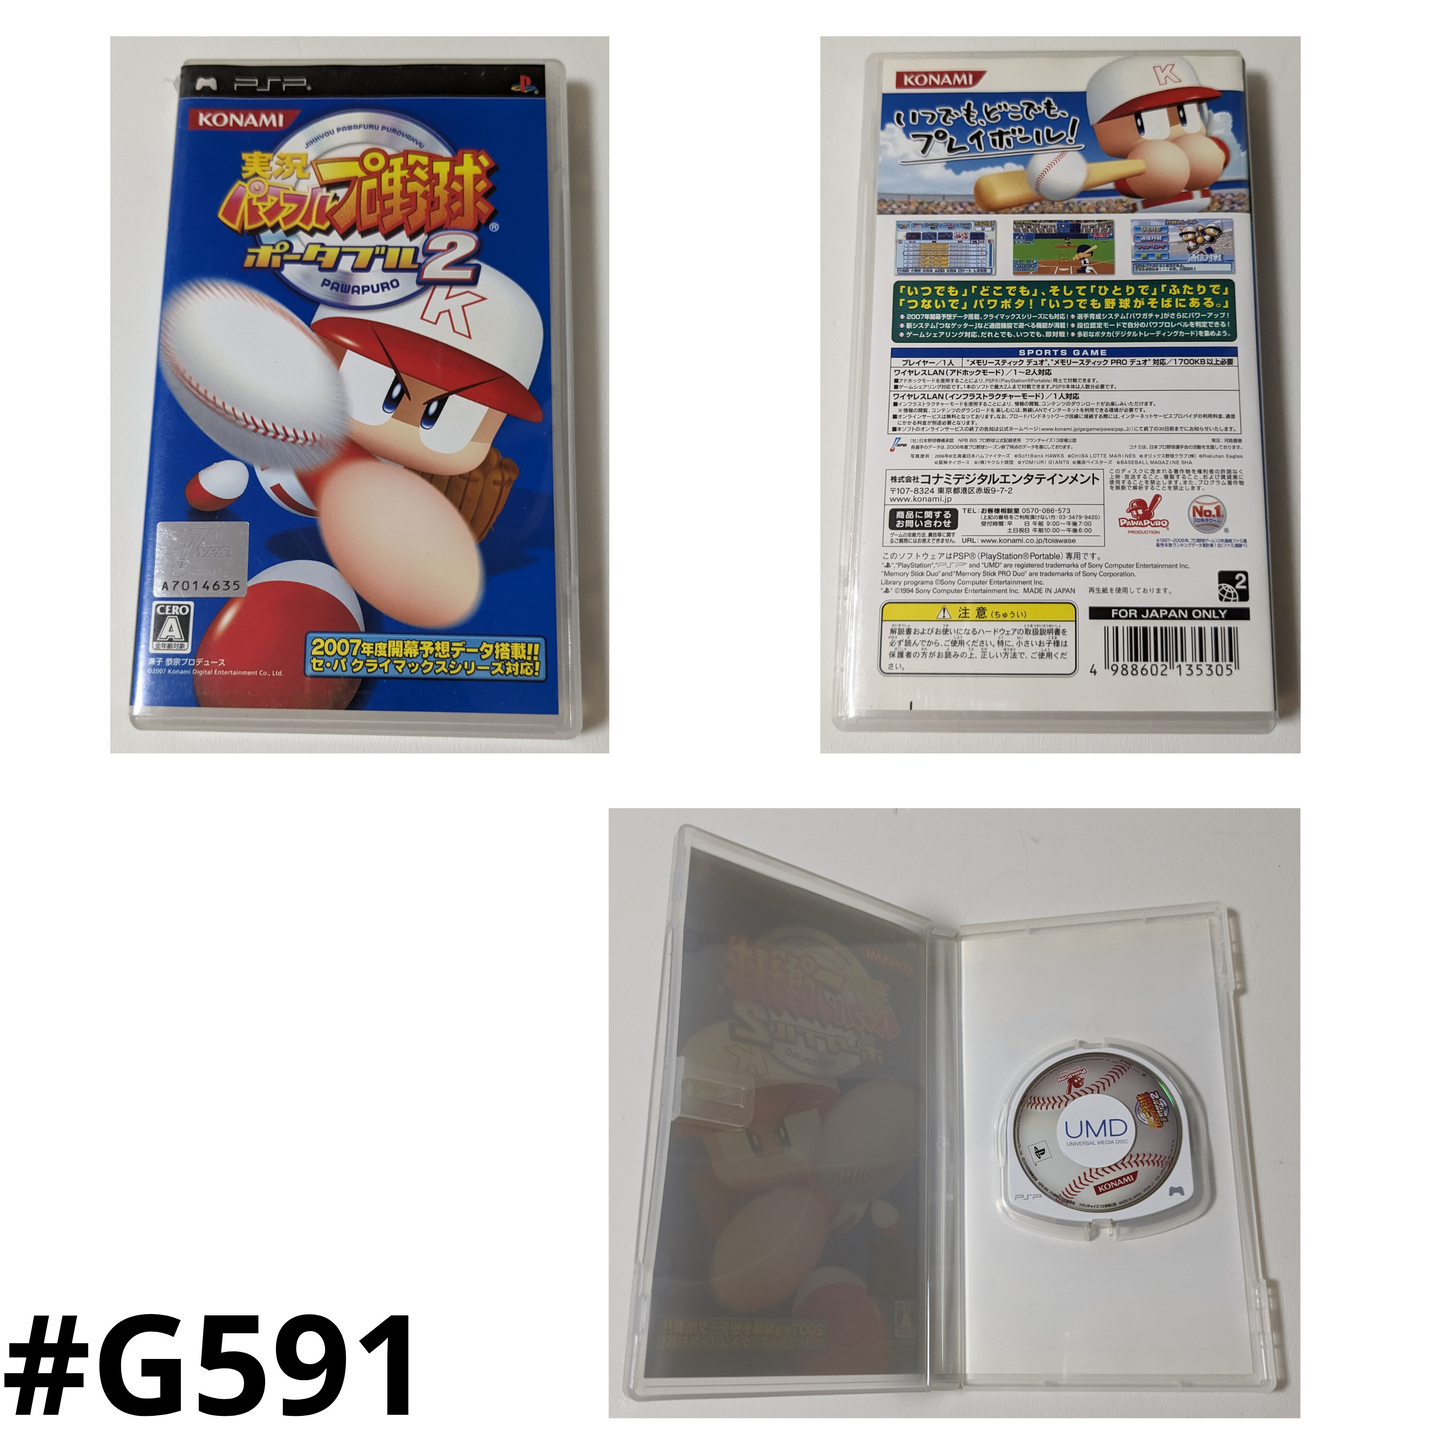 Jikkyou Powerful Portable Baseball 2 | PSP | Japanese